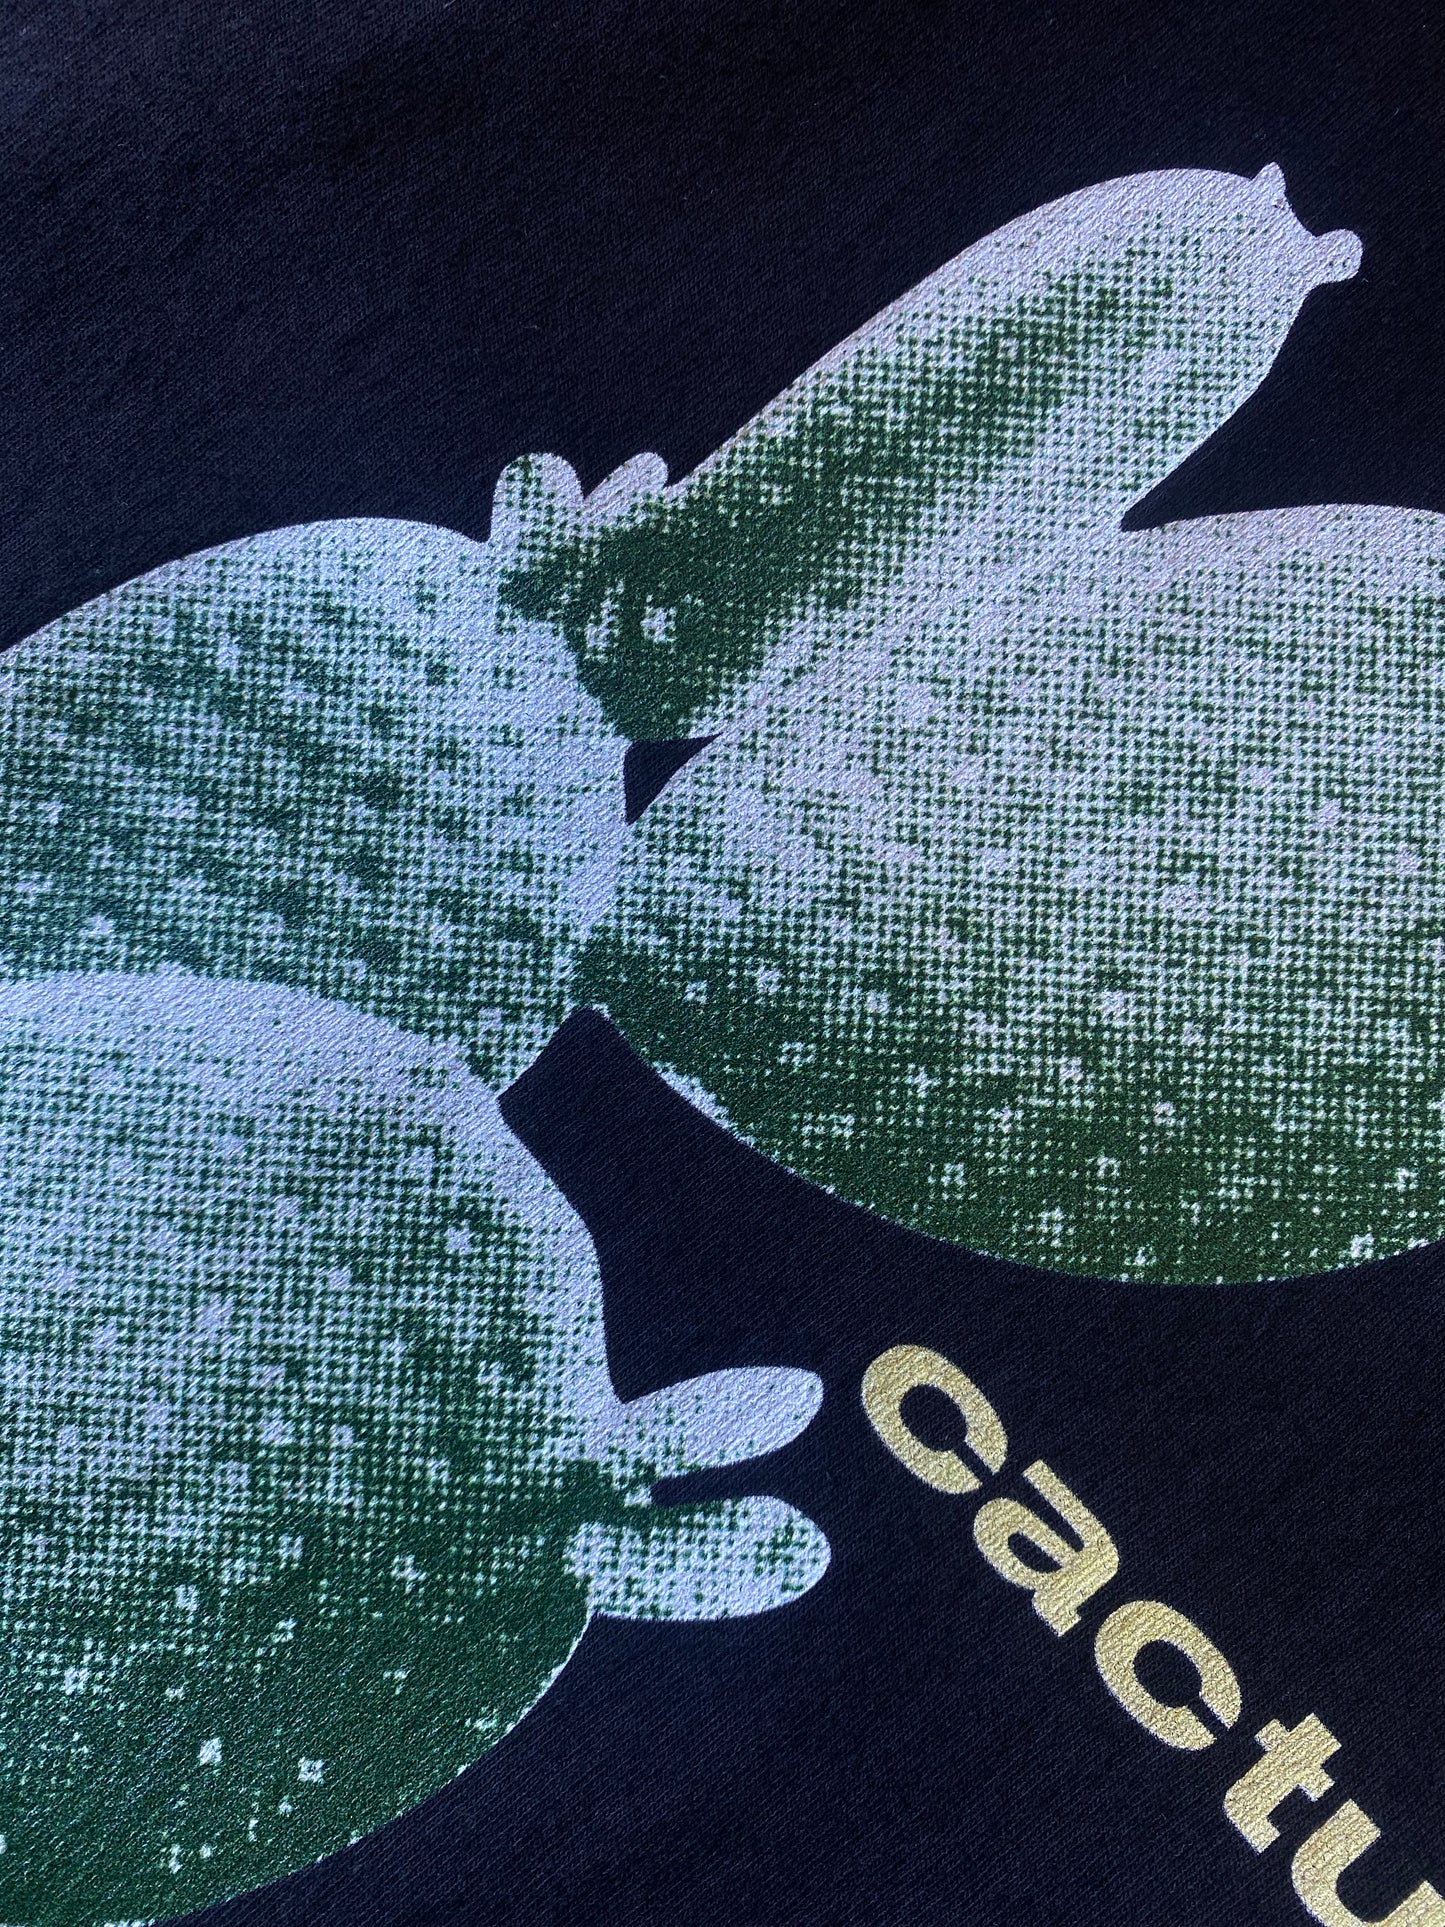 Opunita Cactus Tee